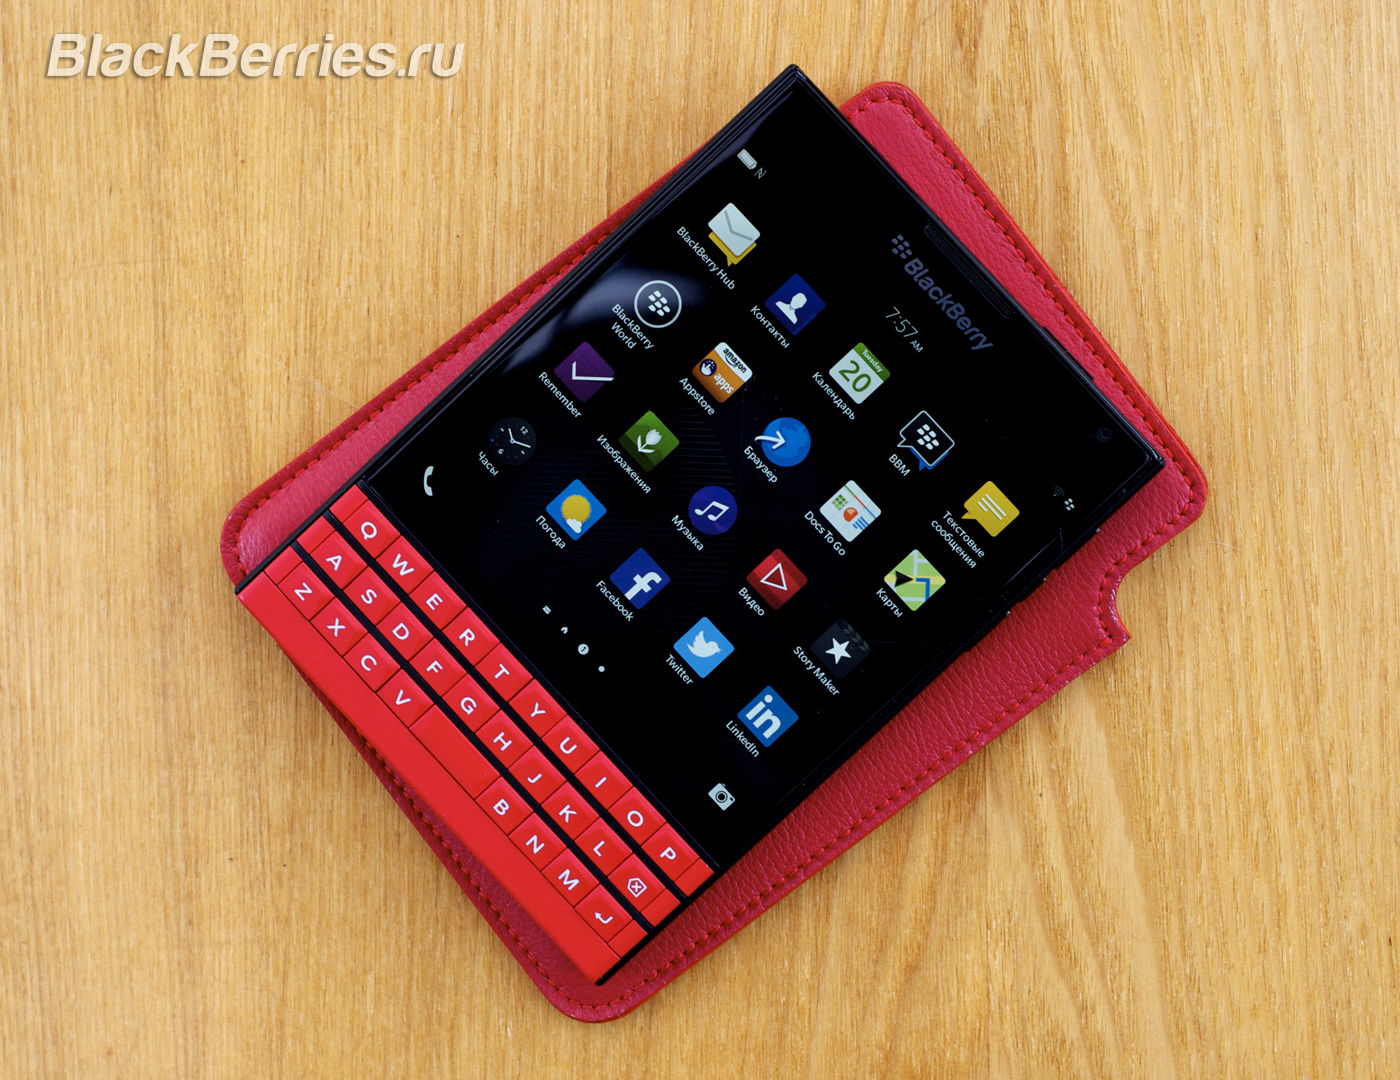 BlackBerry-Passport-Red-10